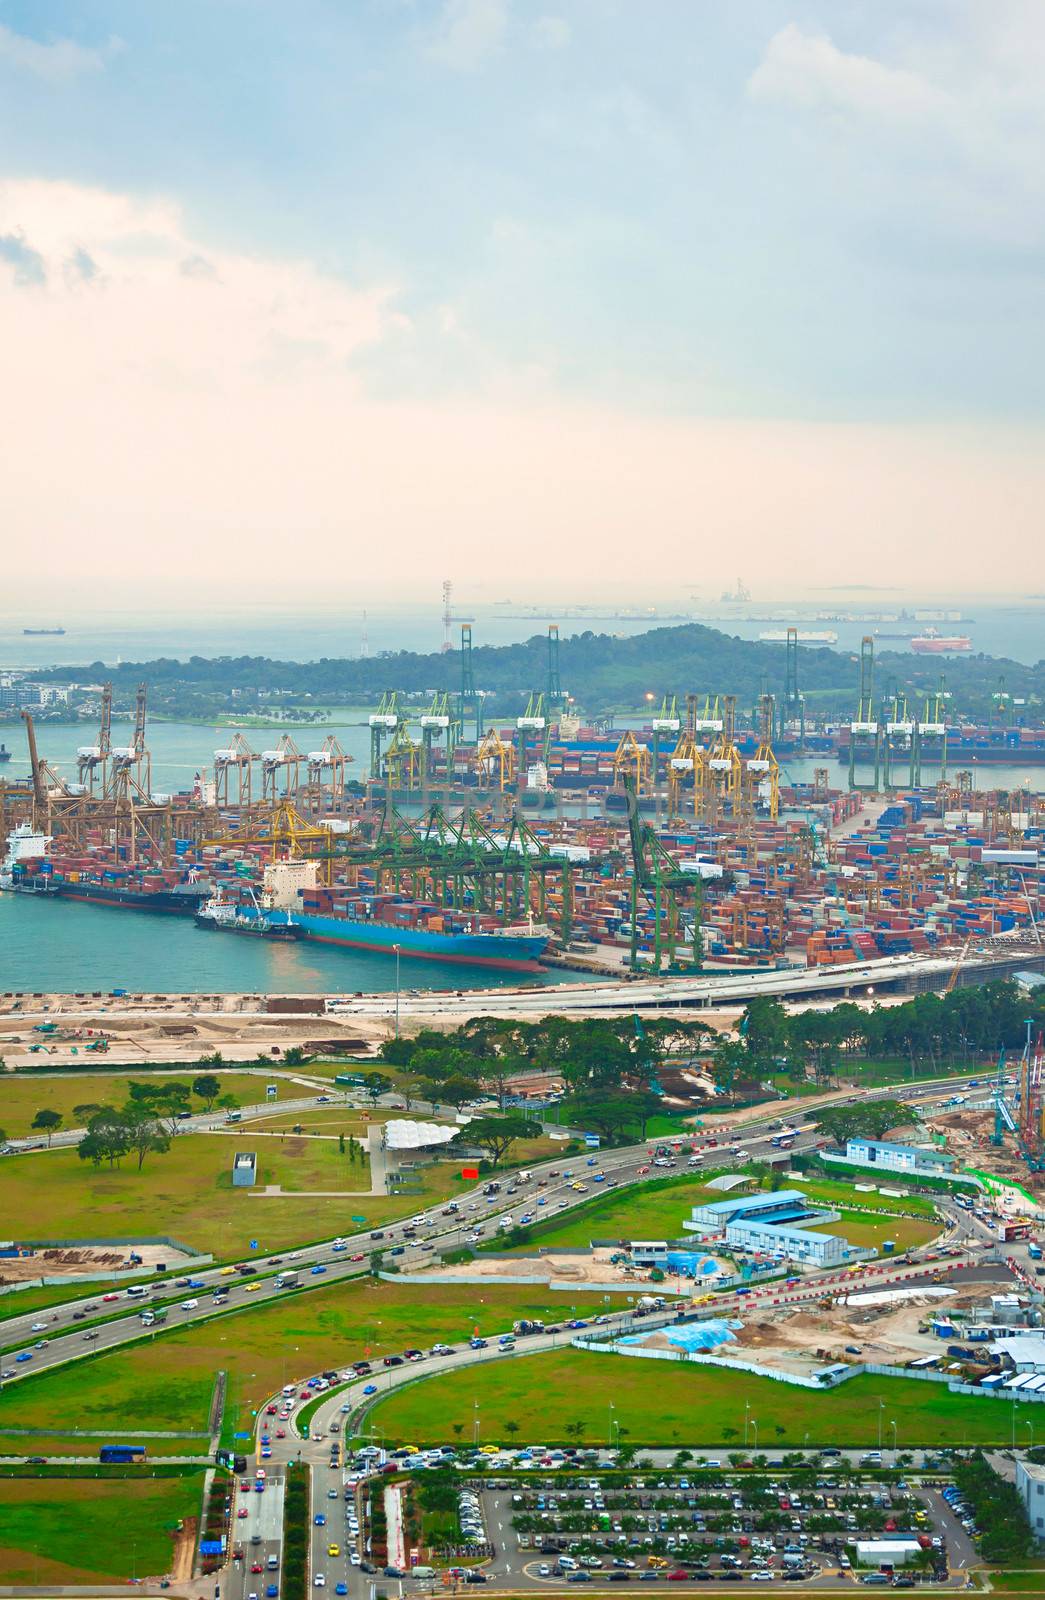 Singapore's port by joyfull